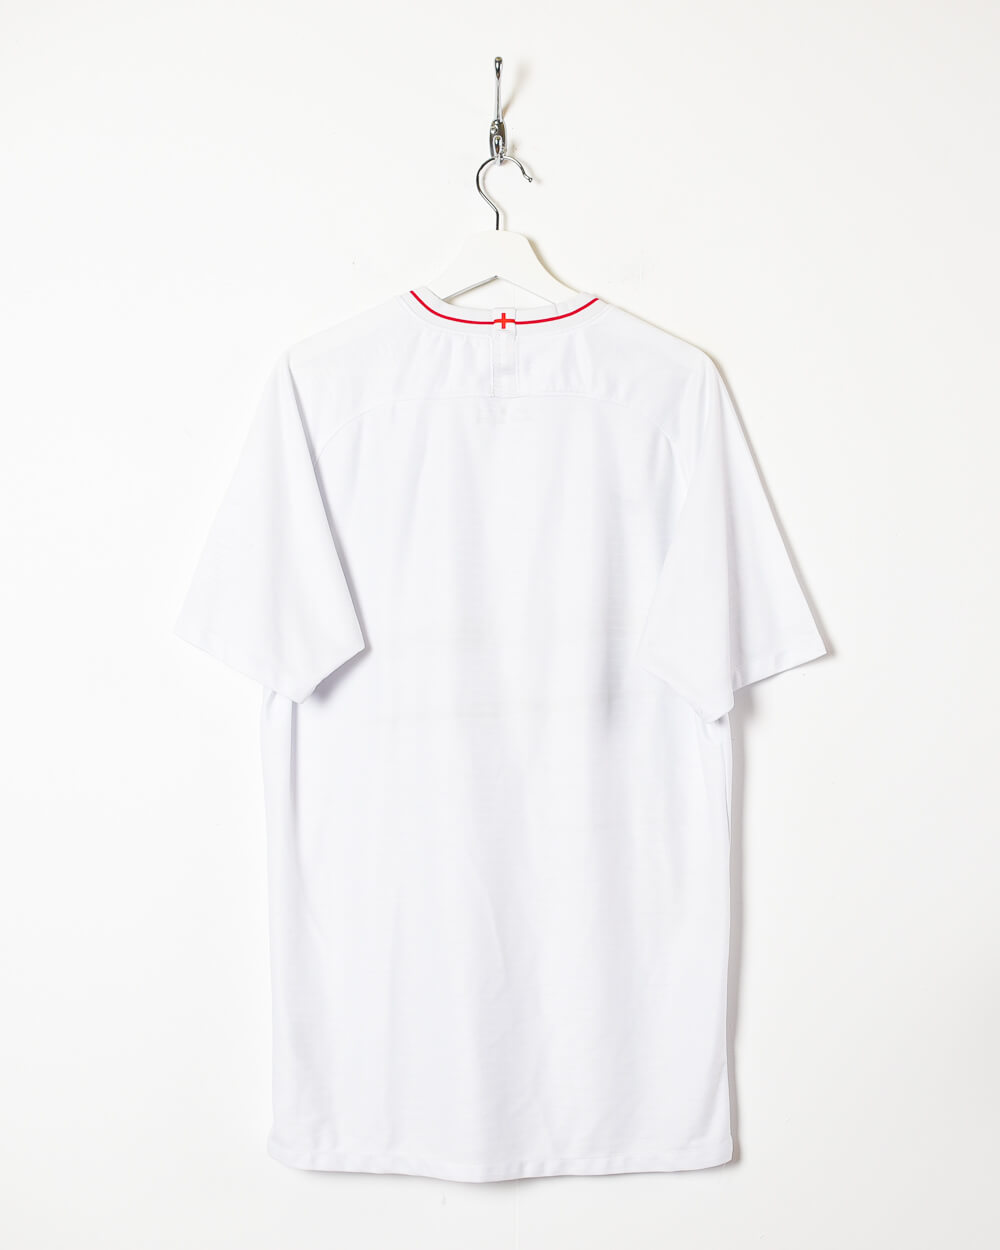 White Nike 2019 England Home Shirt - XX-Large